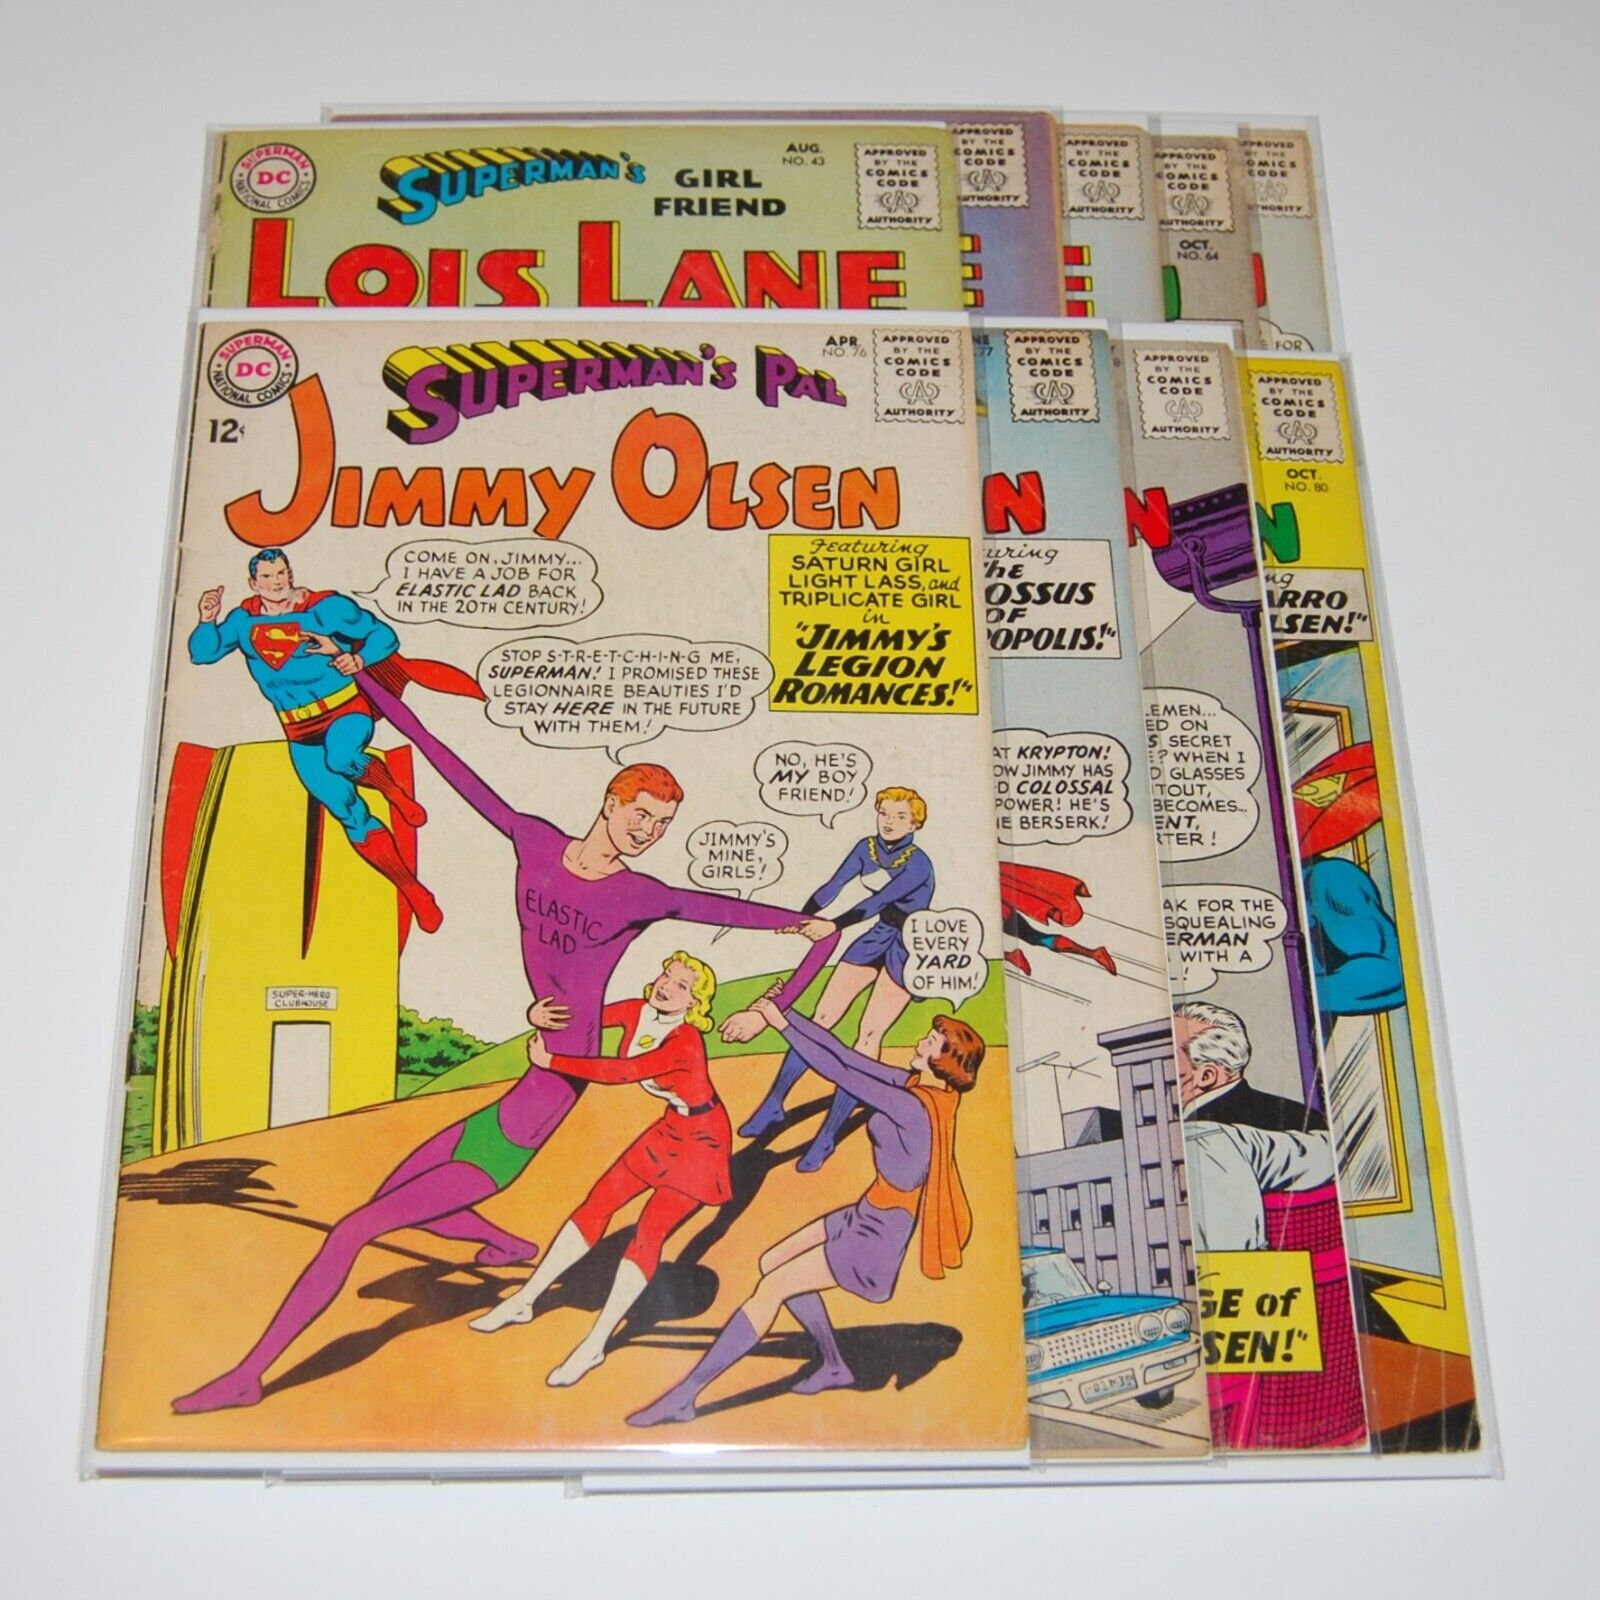 LOT OF NINE 12¢ LOIS LANE / JIMMY OLSEN READERS (DC Comics, Oct 1962 / Oct 1964)